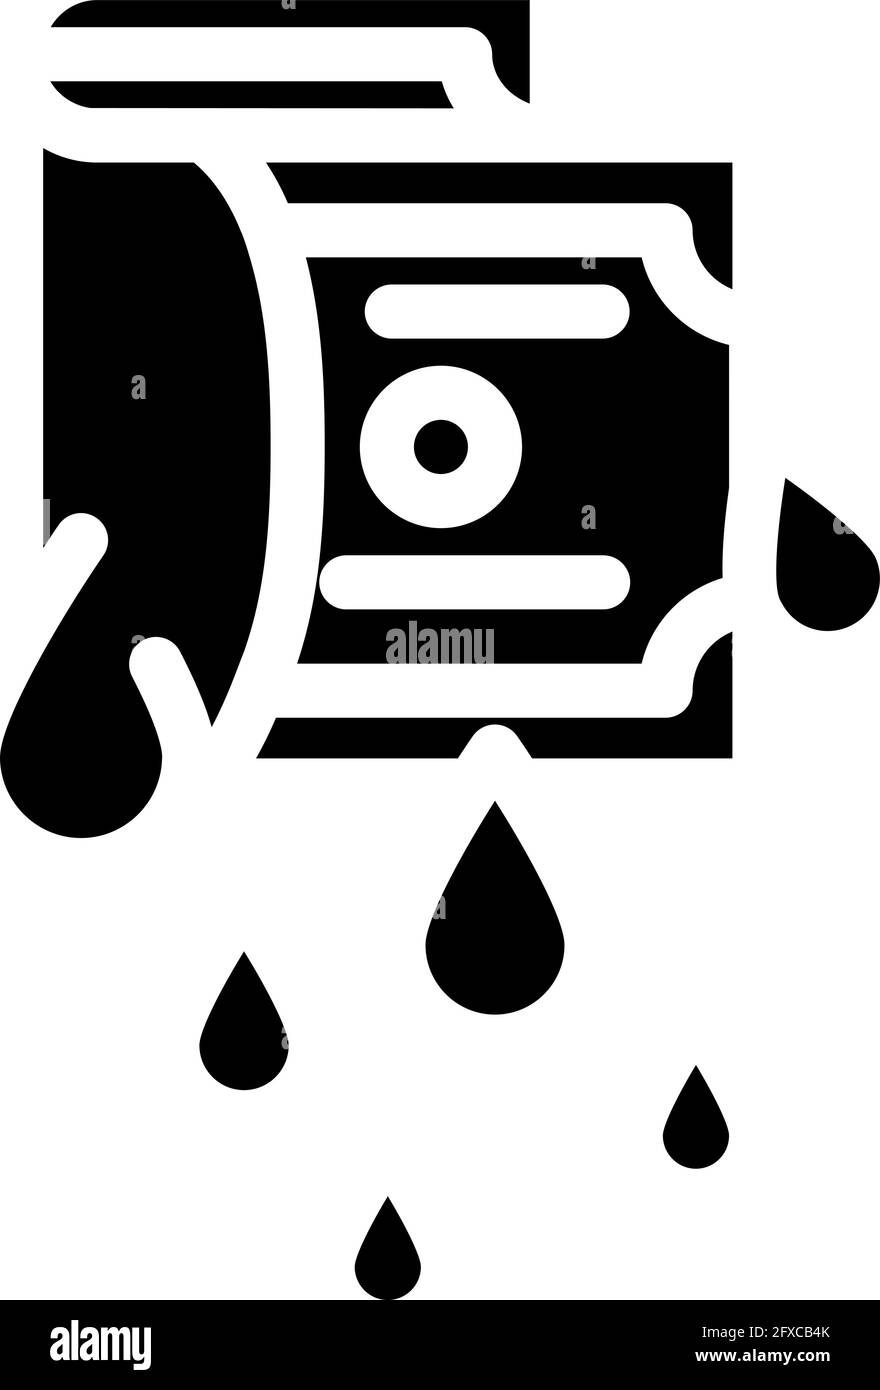 money laundering glyph icon vector illustration Stock Vector